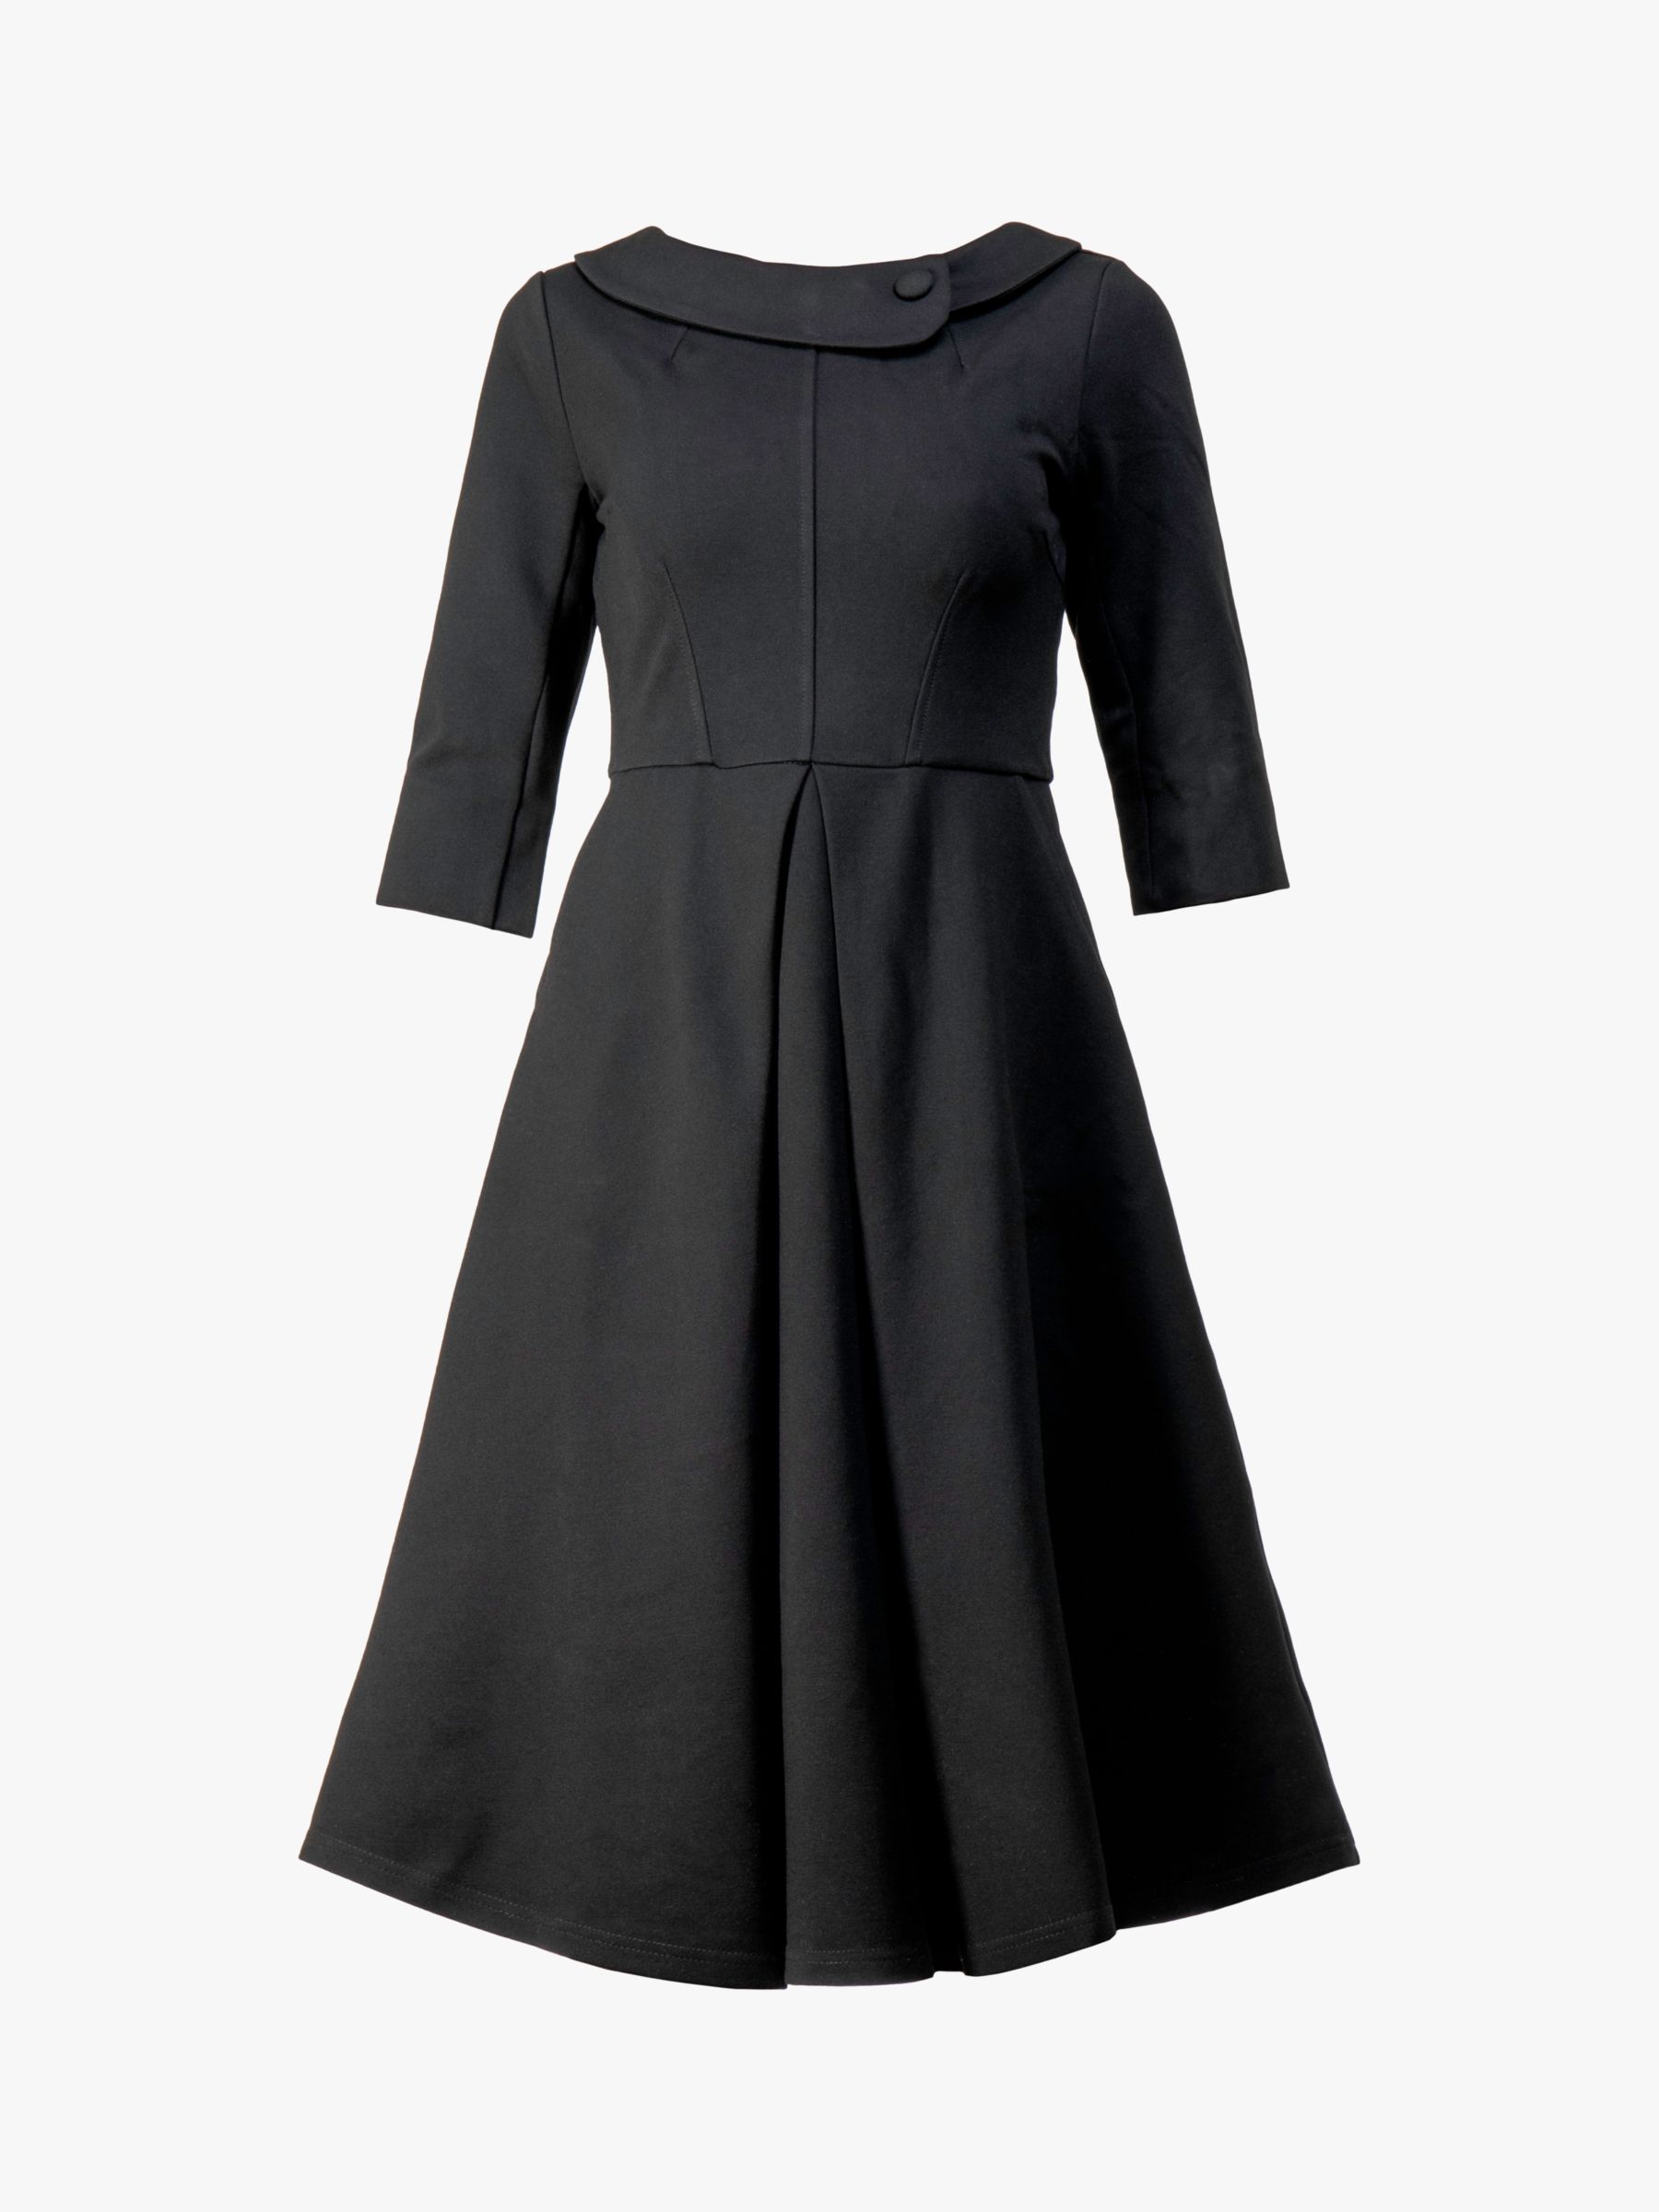 Jolie Moi Kyndall 3/4 Sleeve Flared Dress, Black at John Lewis & Partners